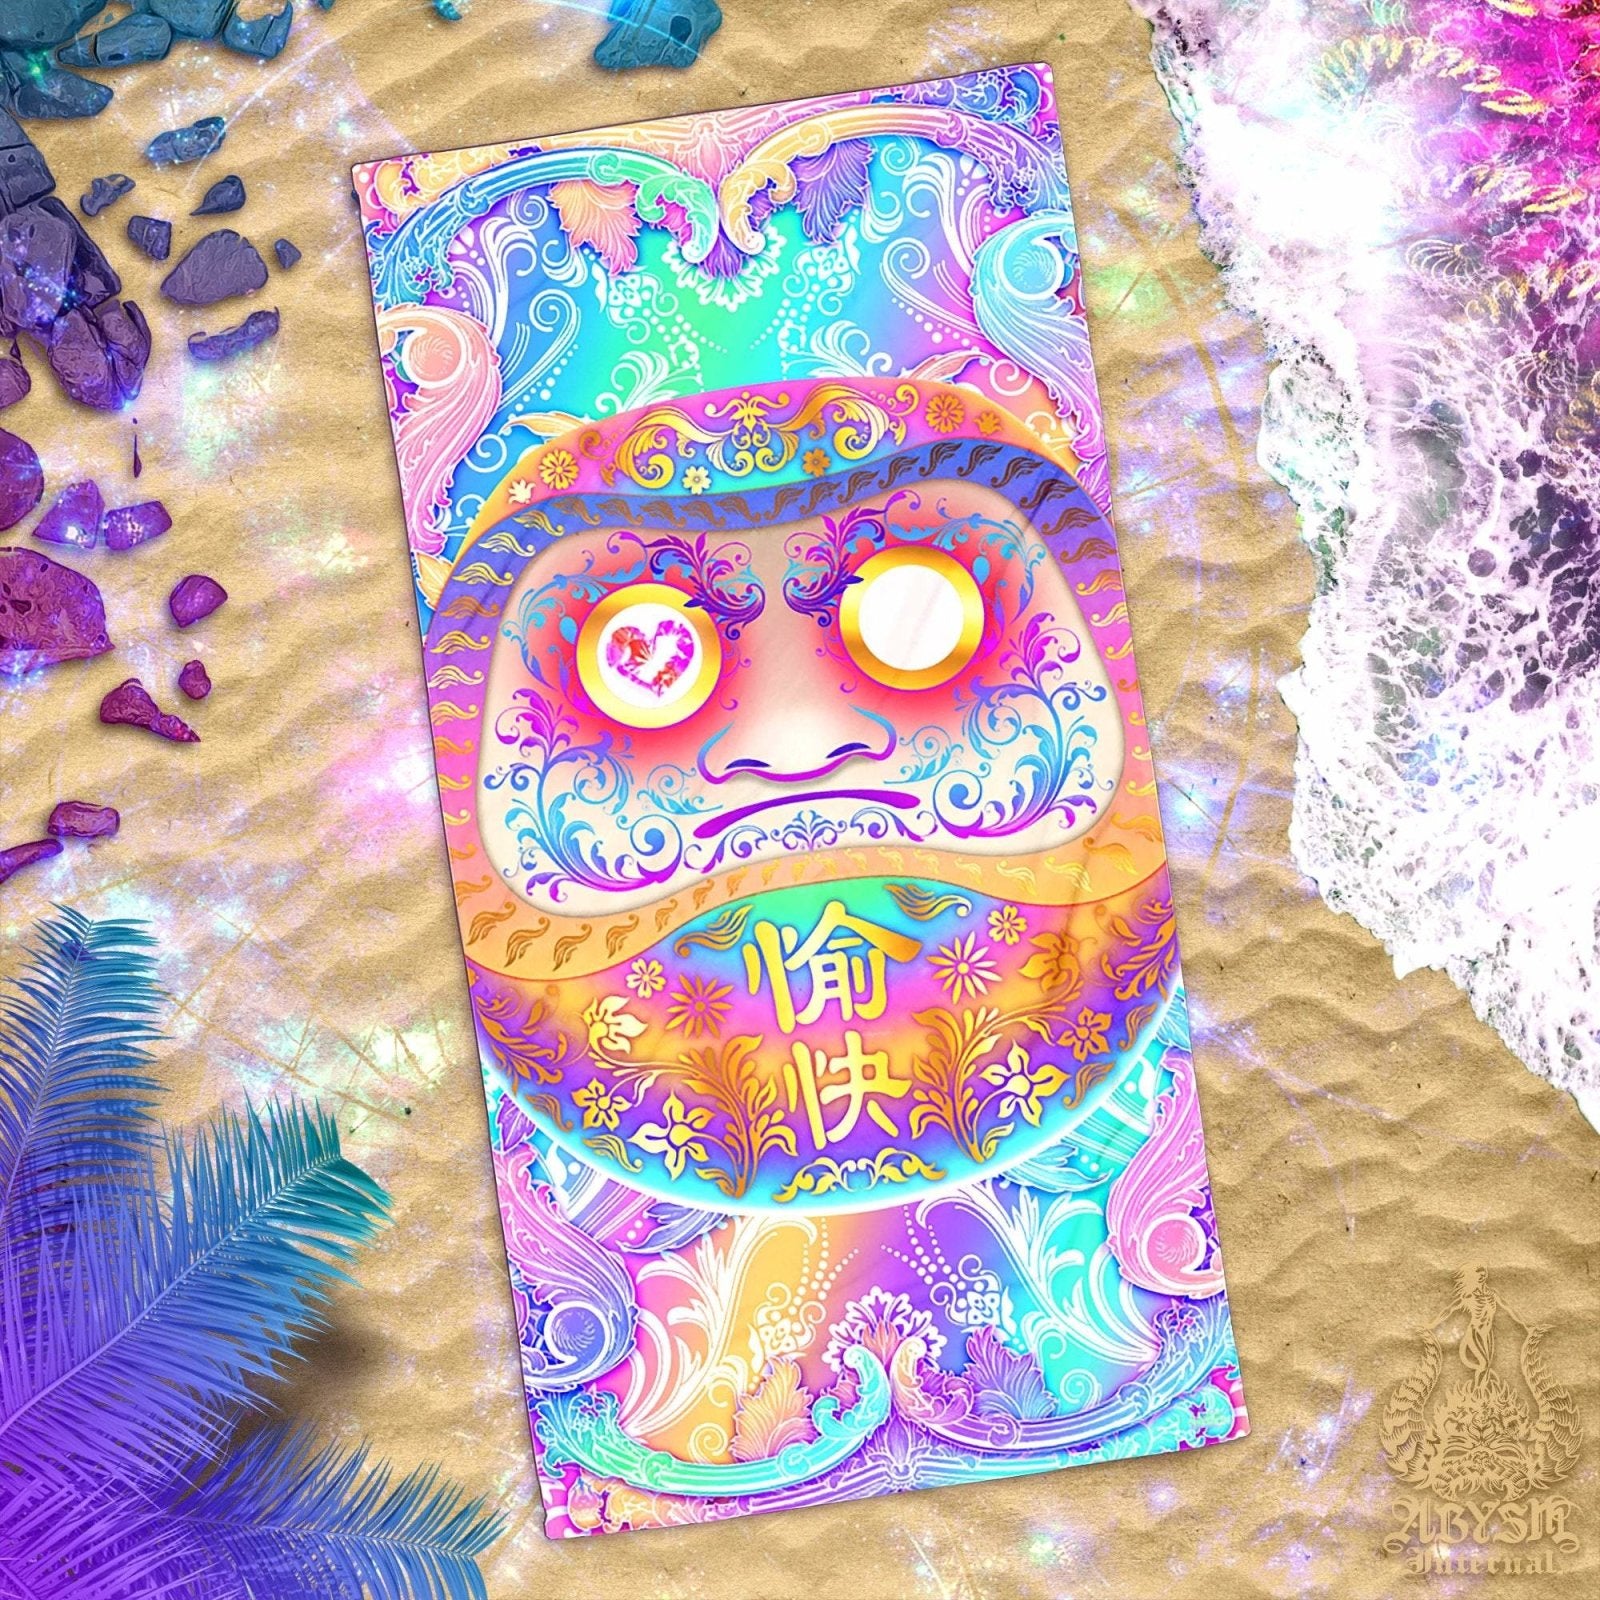 Daruma Beach Towel, Japanese Good Luck and Wish Charm - Psychedelic, Aestheti,c Pastel - Abysm Internal